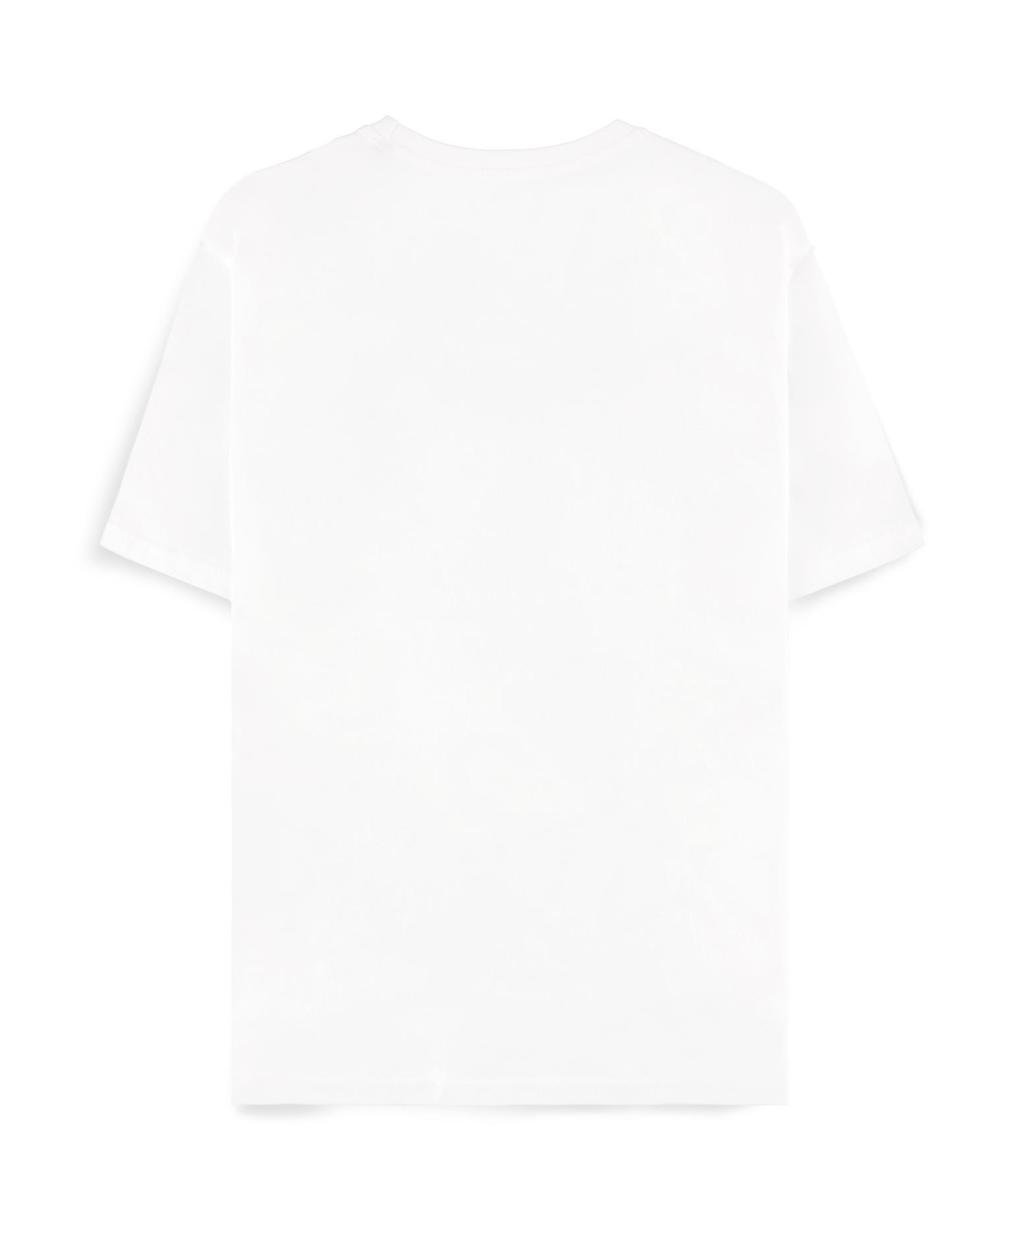 NARUTO Shippuden - Sasuke Symbol - Women's T-shirt (L)